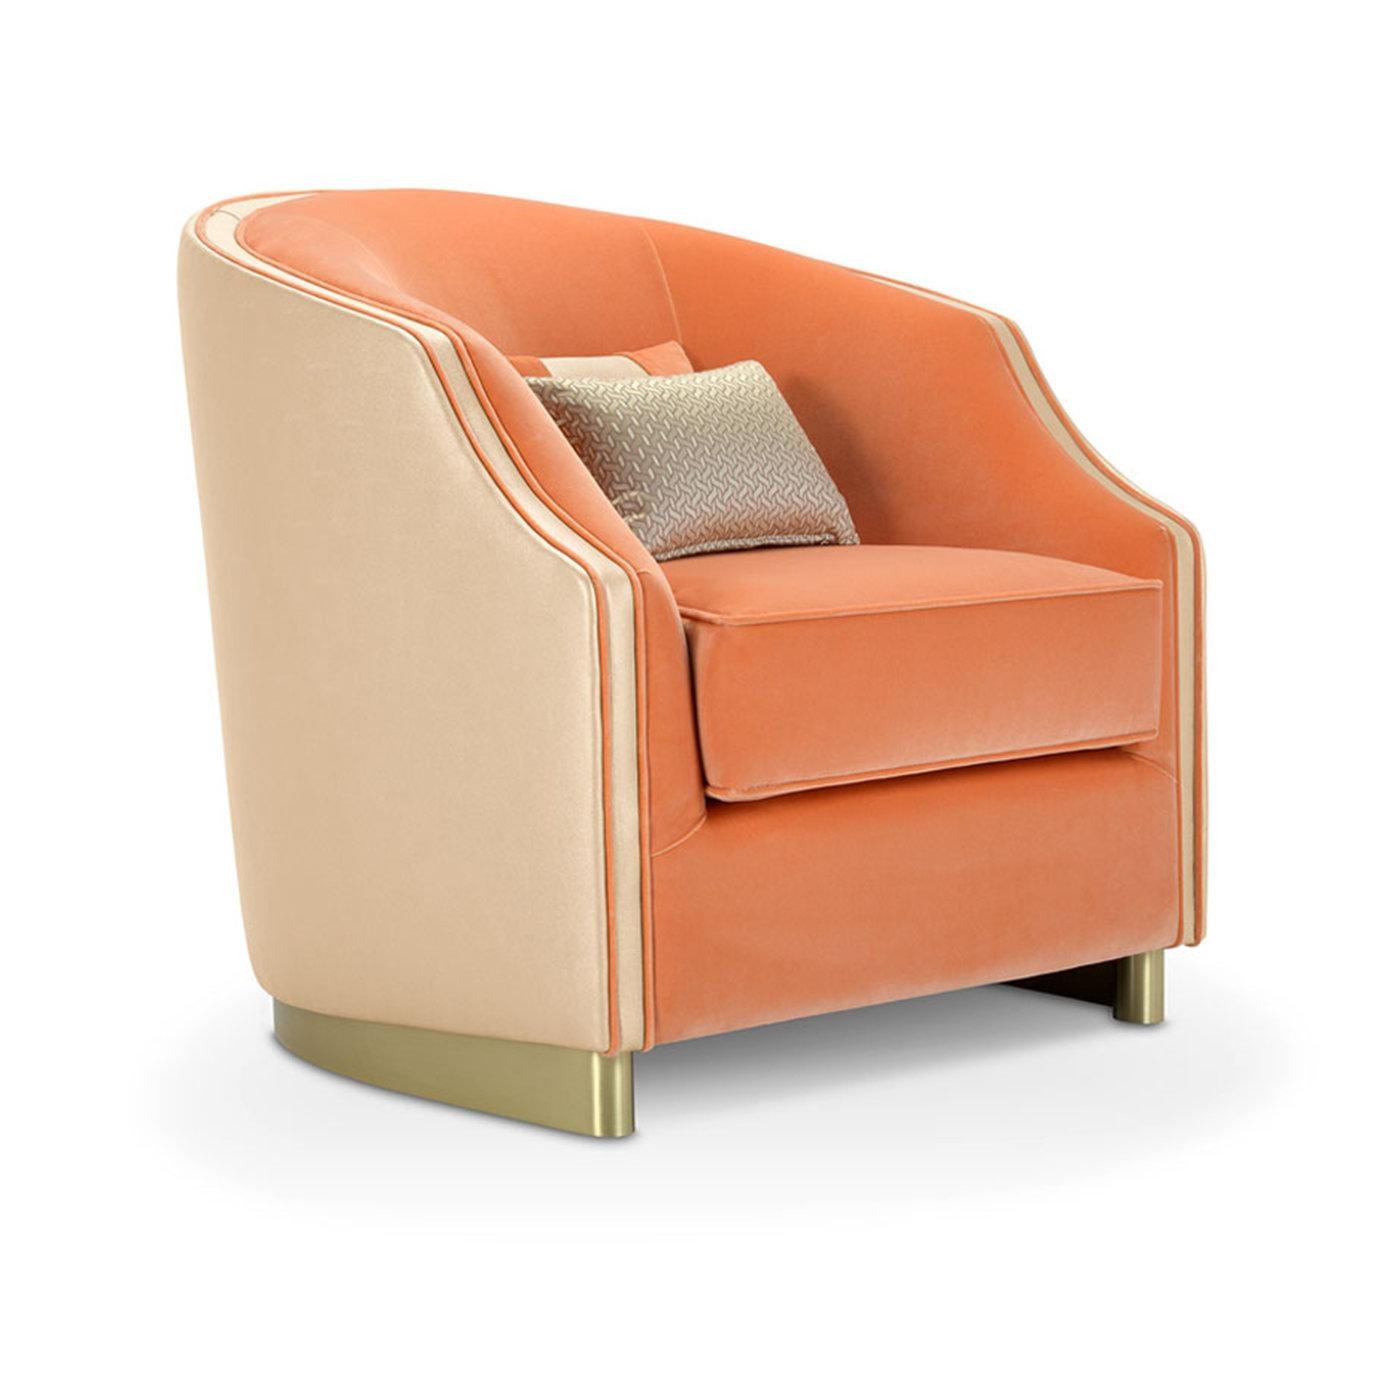 Italian Cleio Small Orange Armchair